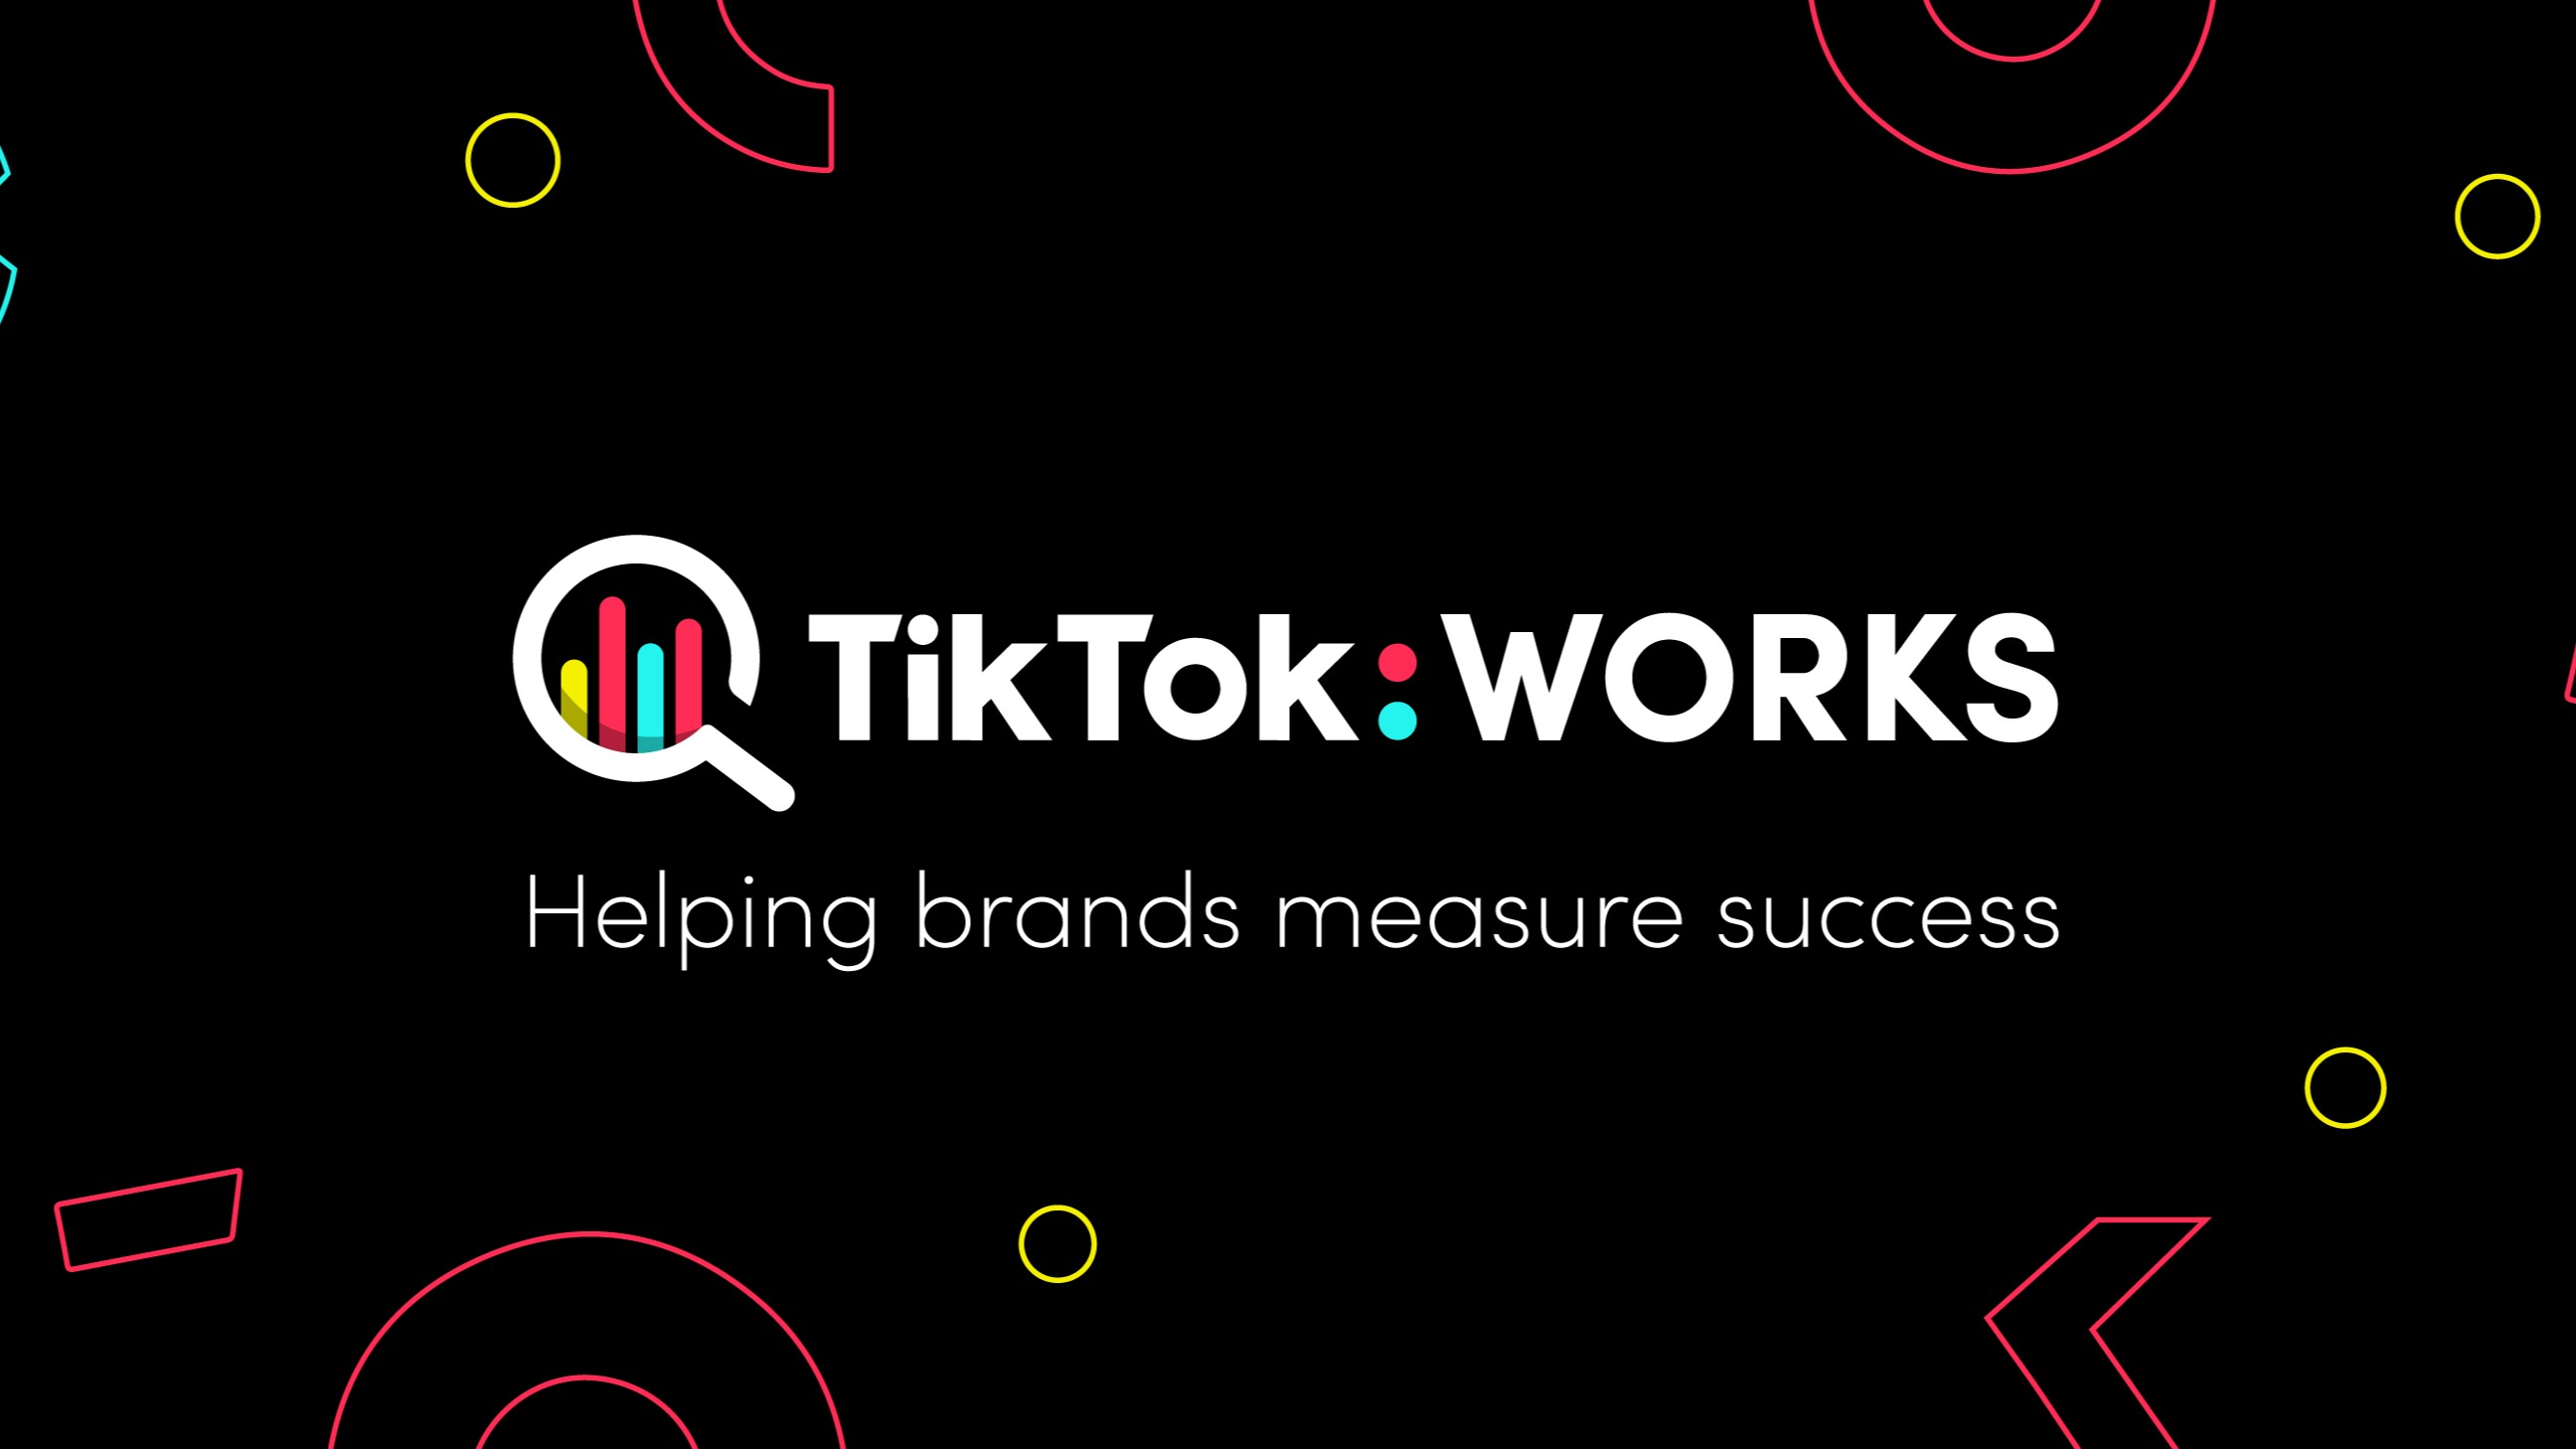 TikTok improves efficiency for brands